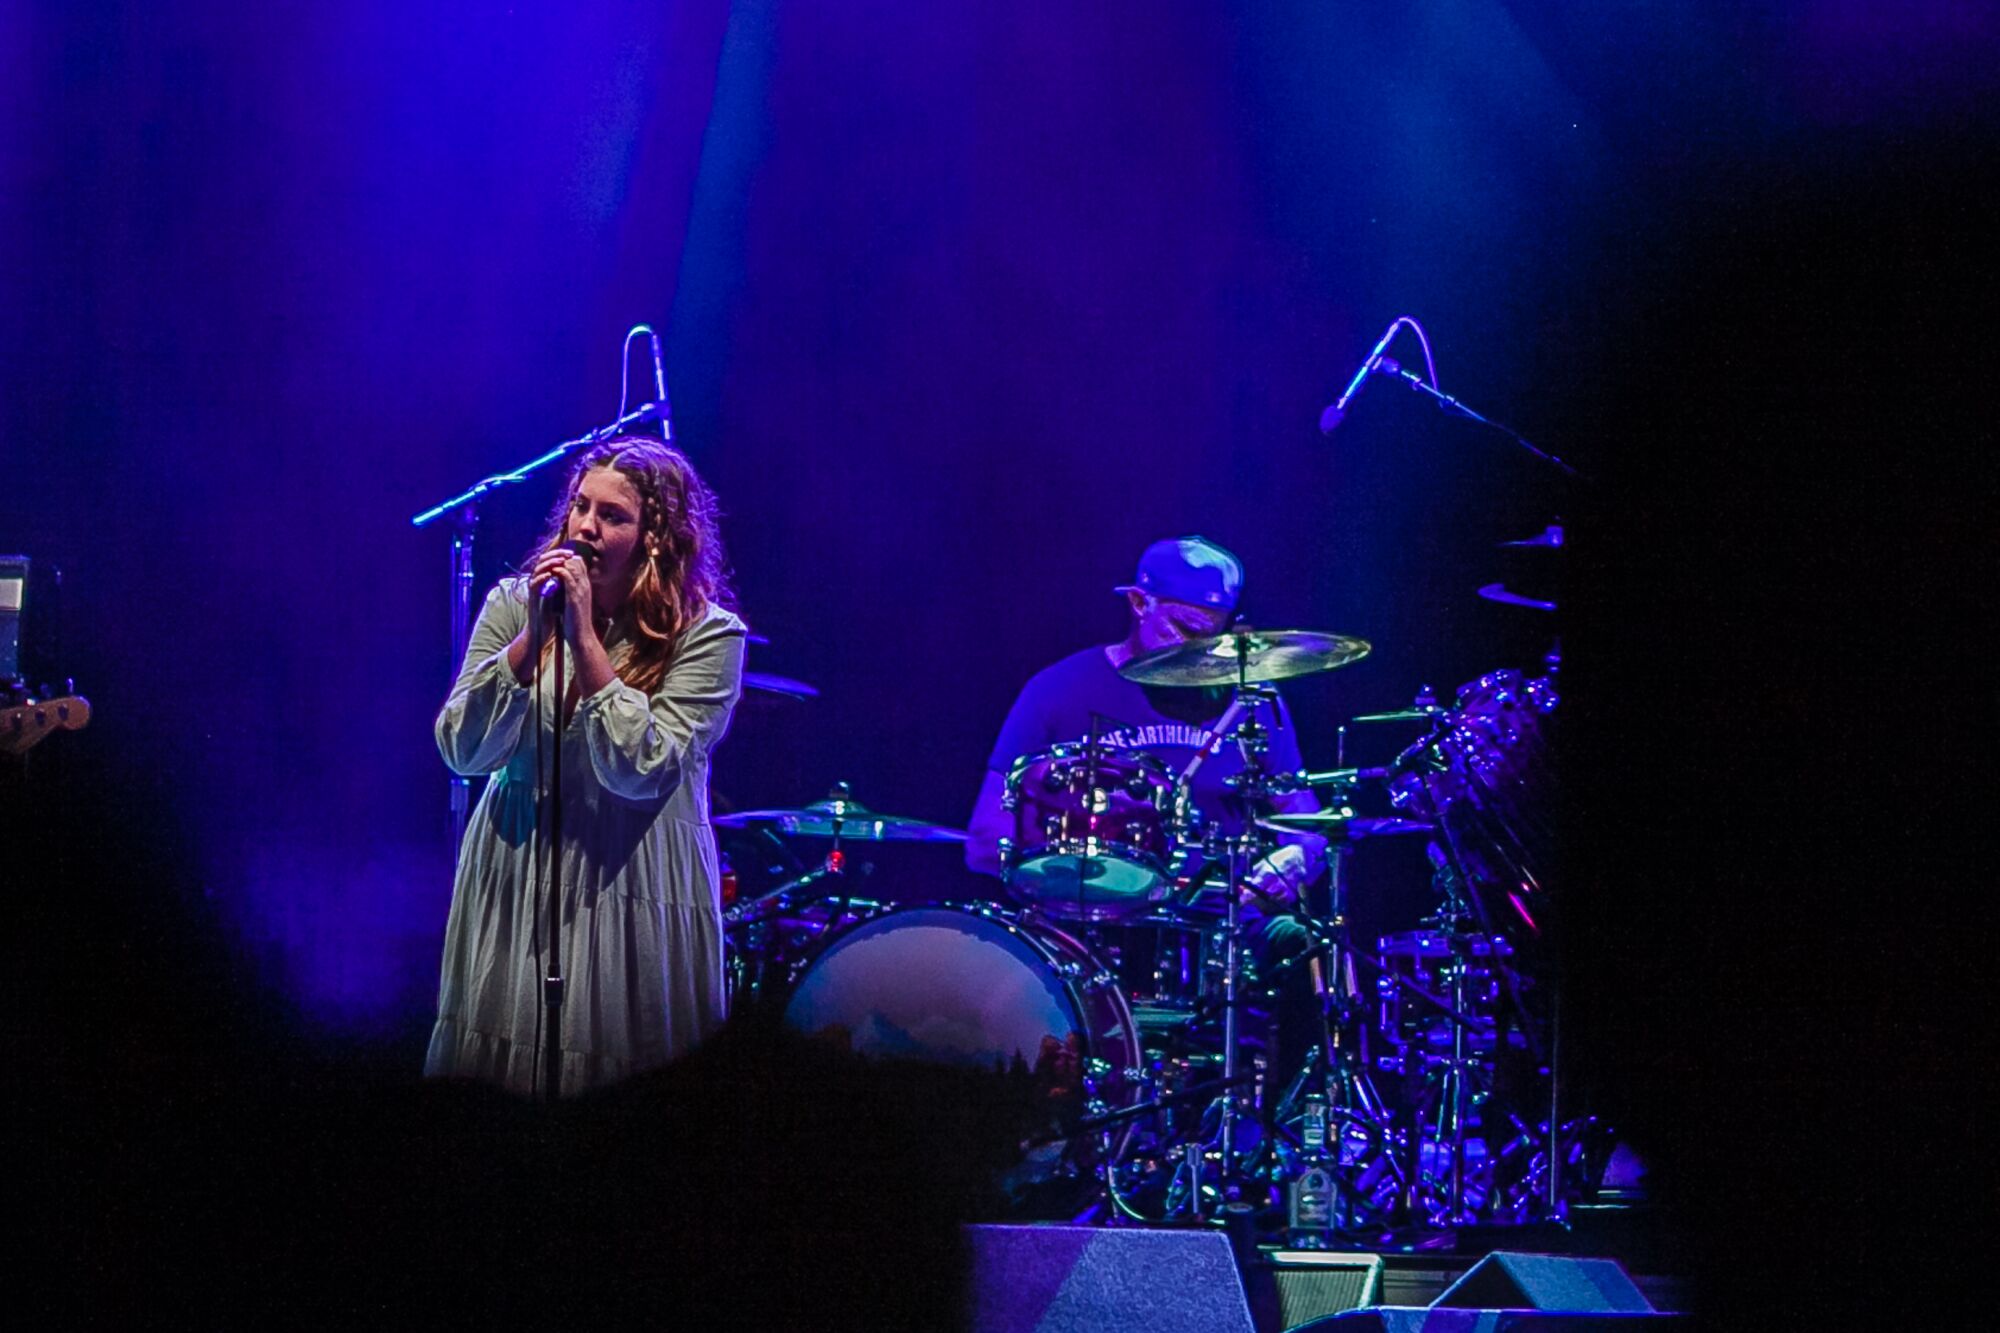 Singer Olivia Vedder performs on stage at the Ohana Festival on September 25, 2021 in Dana Point, California.